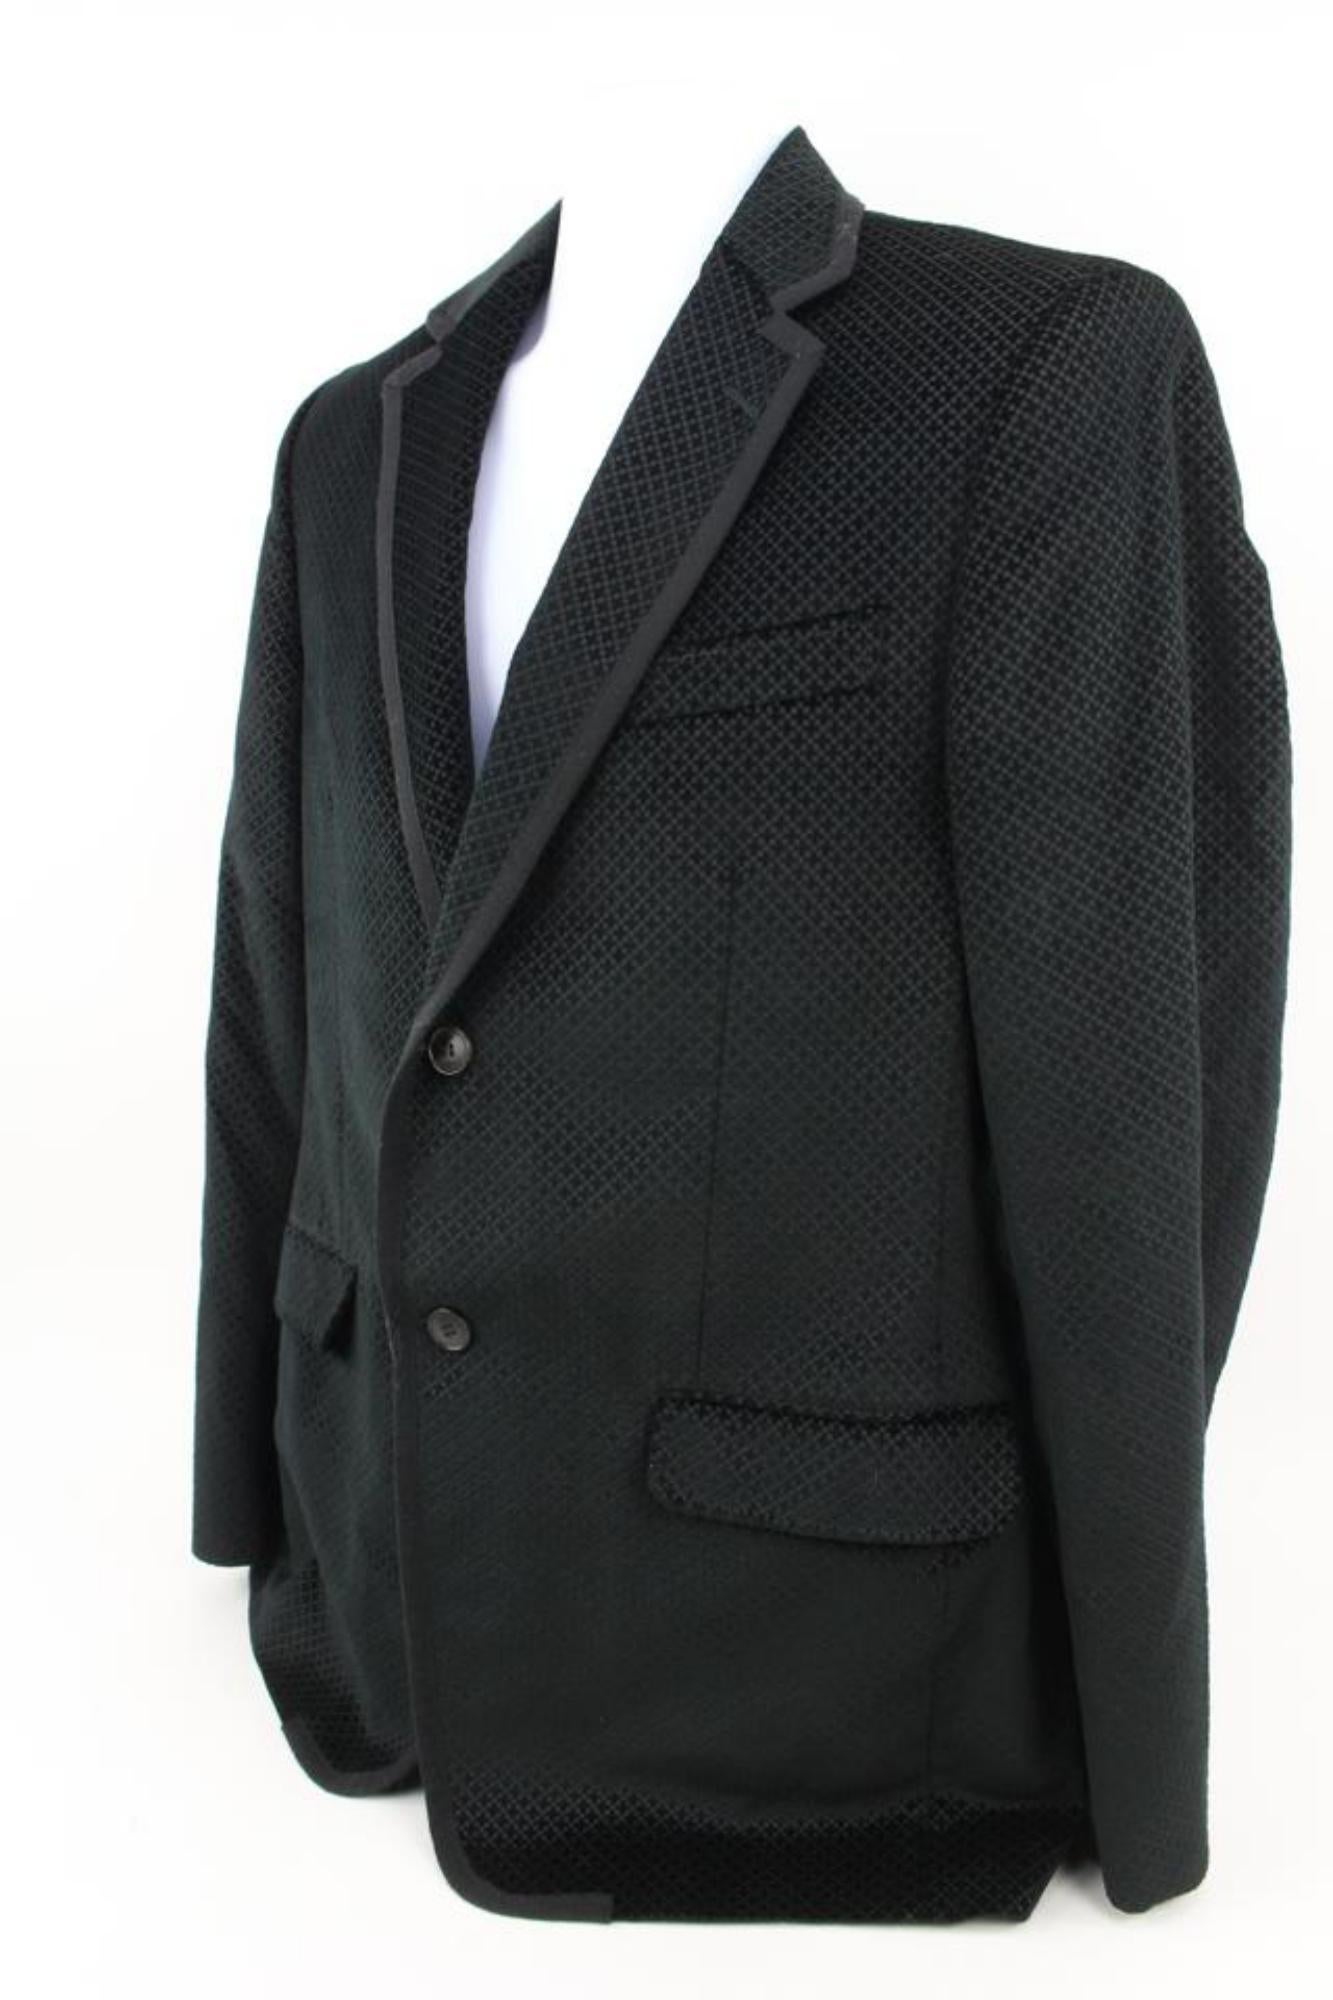 Gucci Men's Large Black Diamante Velvet Formal Smoking Jacket 125g27
Made In: Switzerland
Measurements: Length:  19